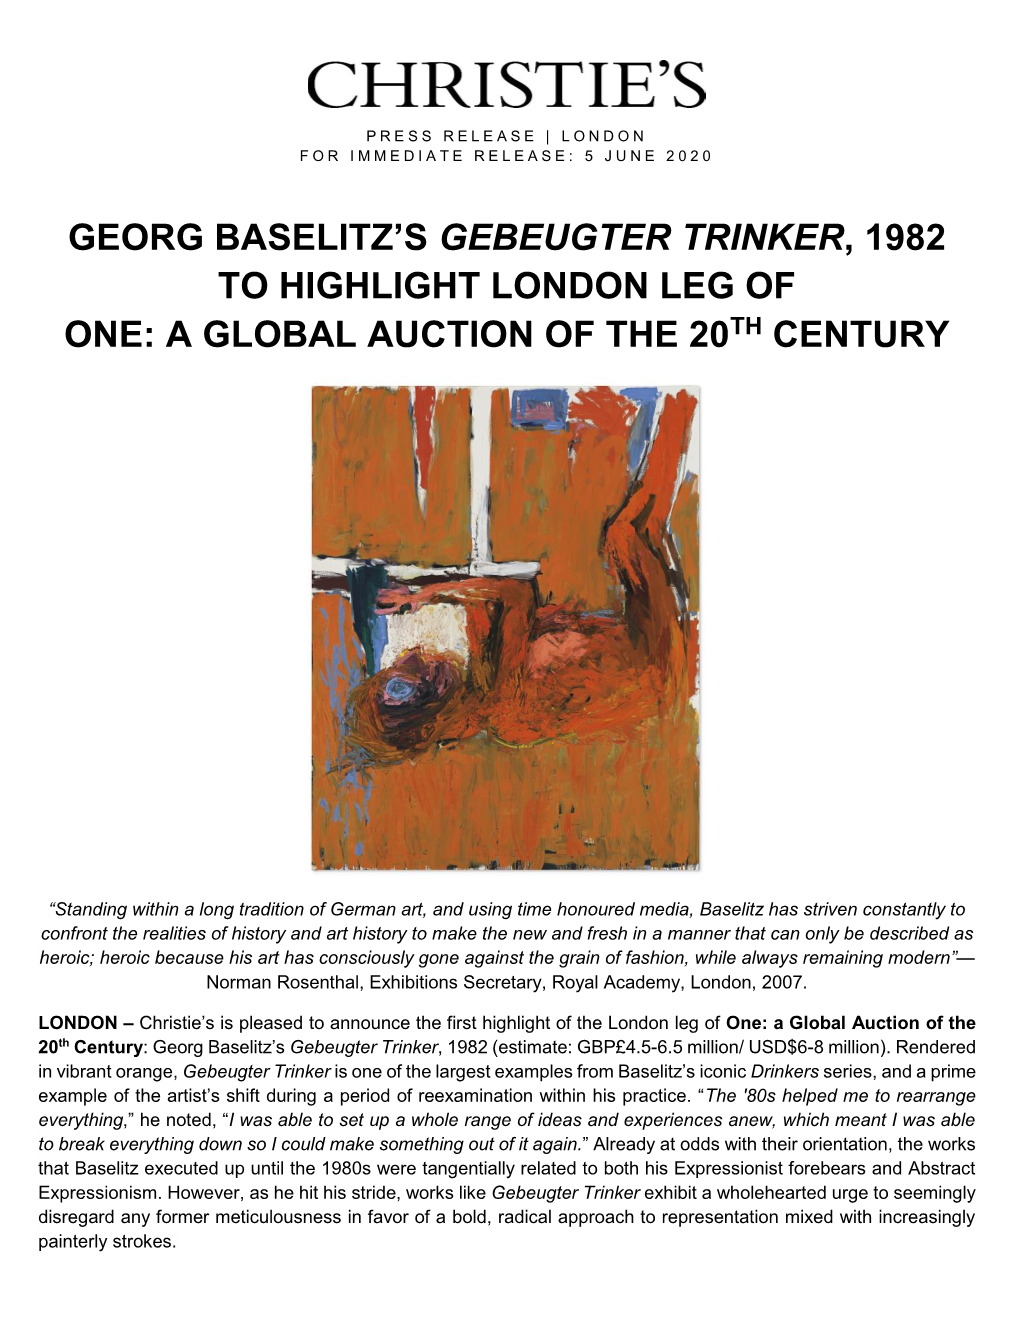 Georg Baselitz's Gebeugter Trinker, 1982 To